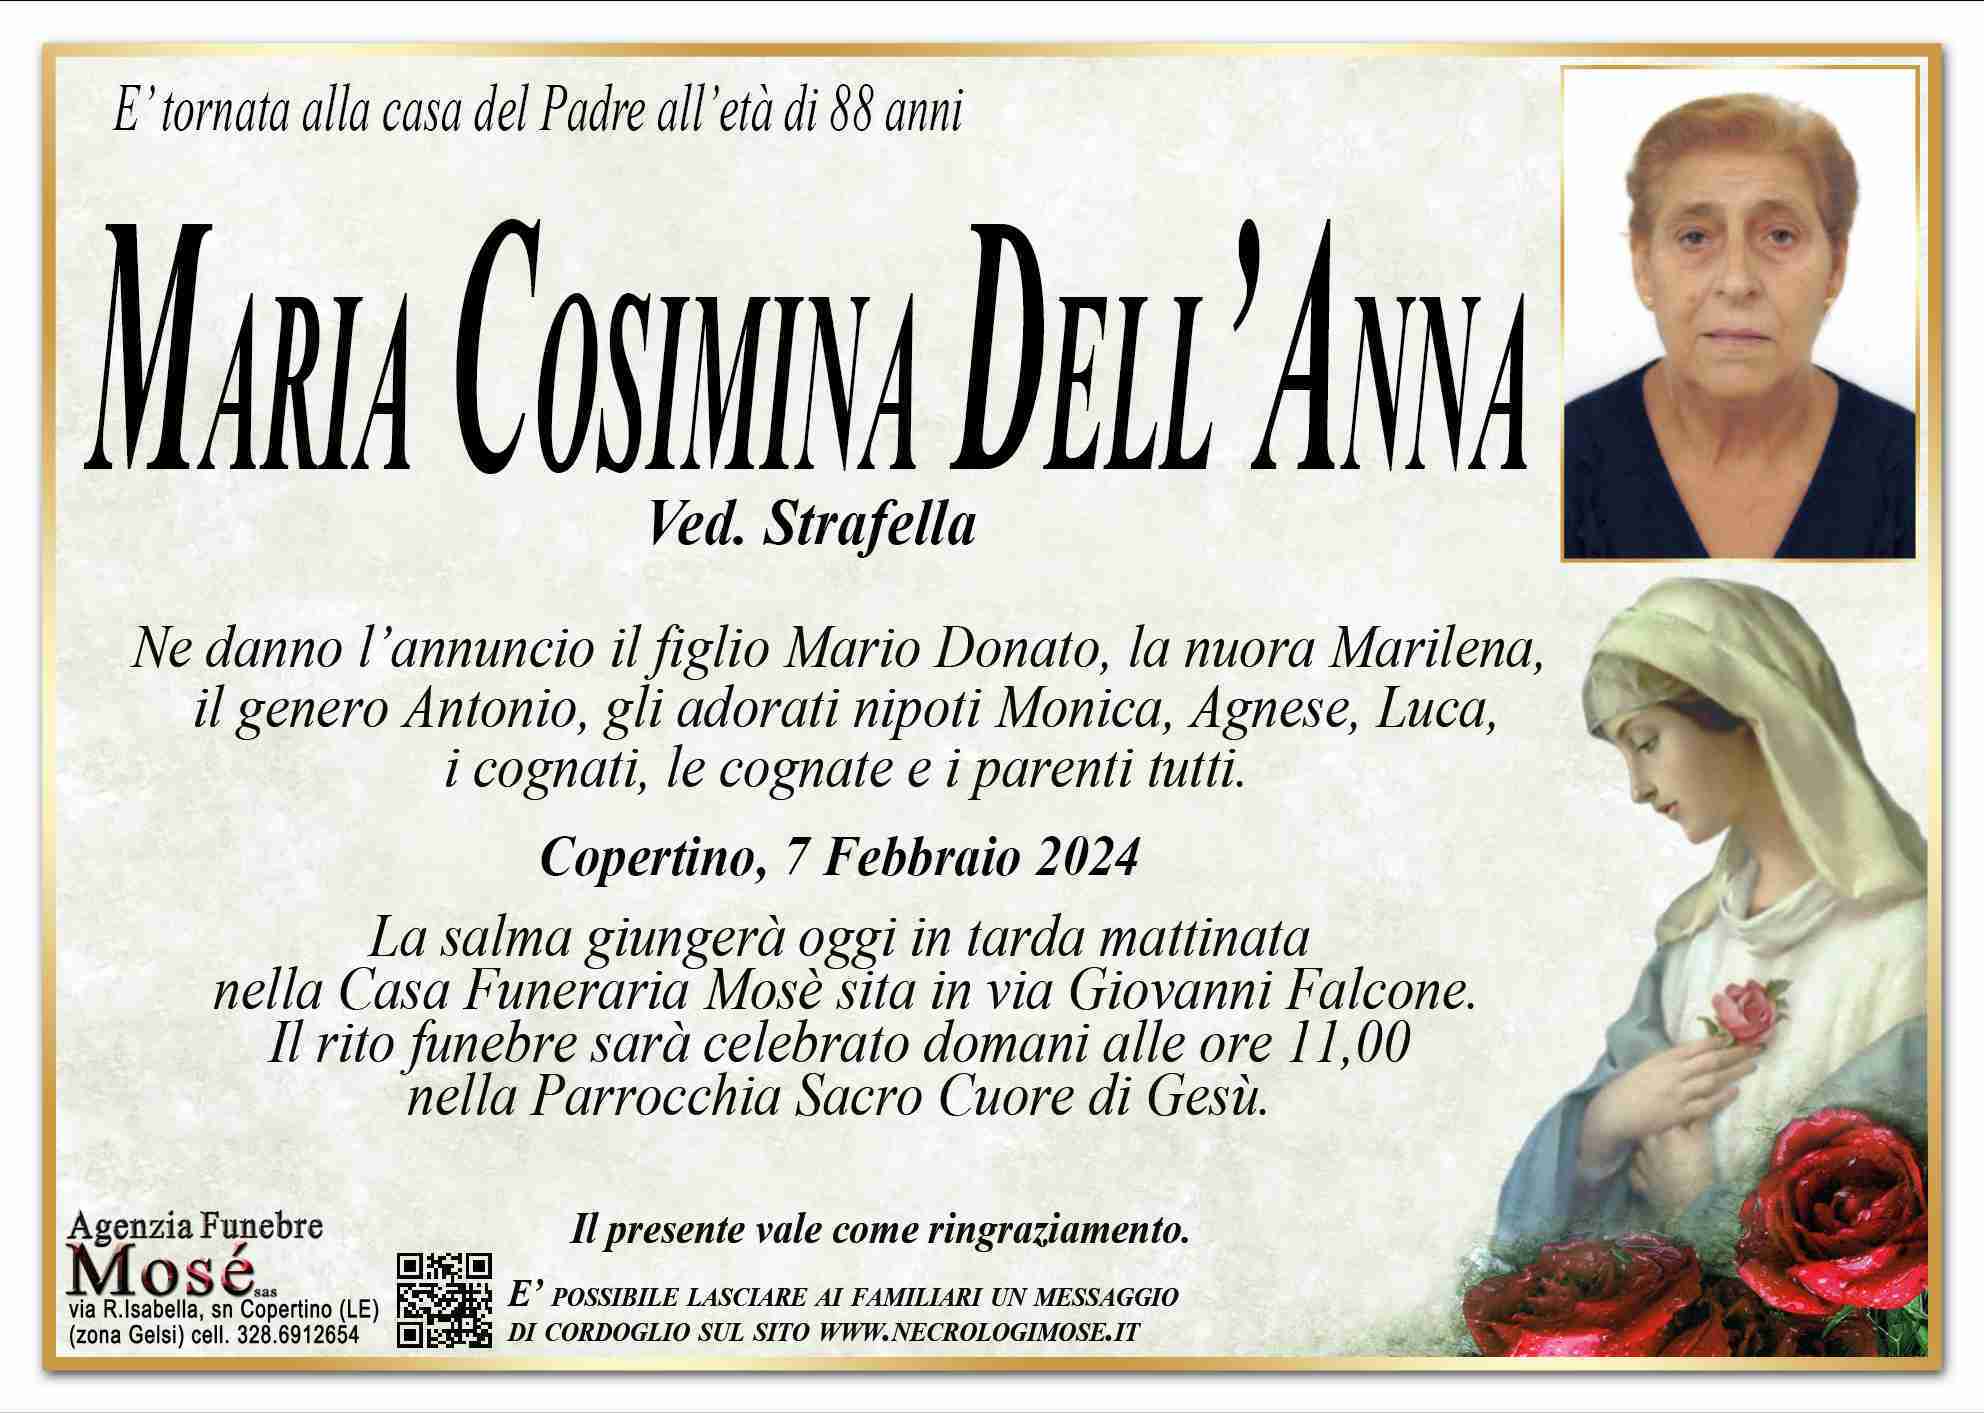 Maria Cosimina Dell'Anna